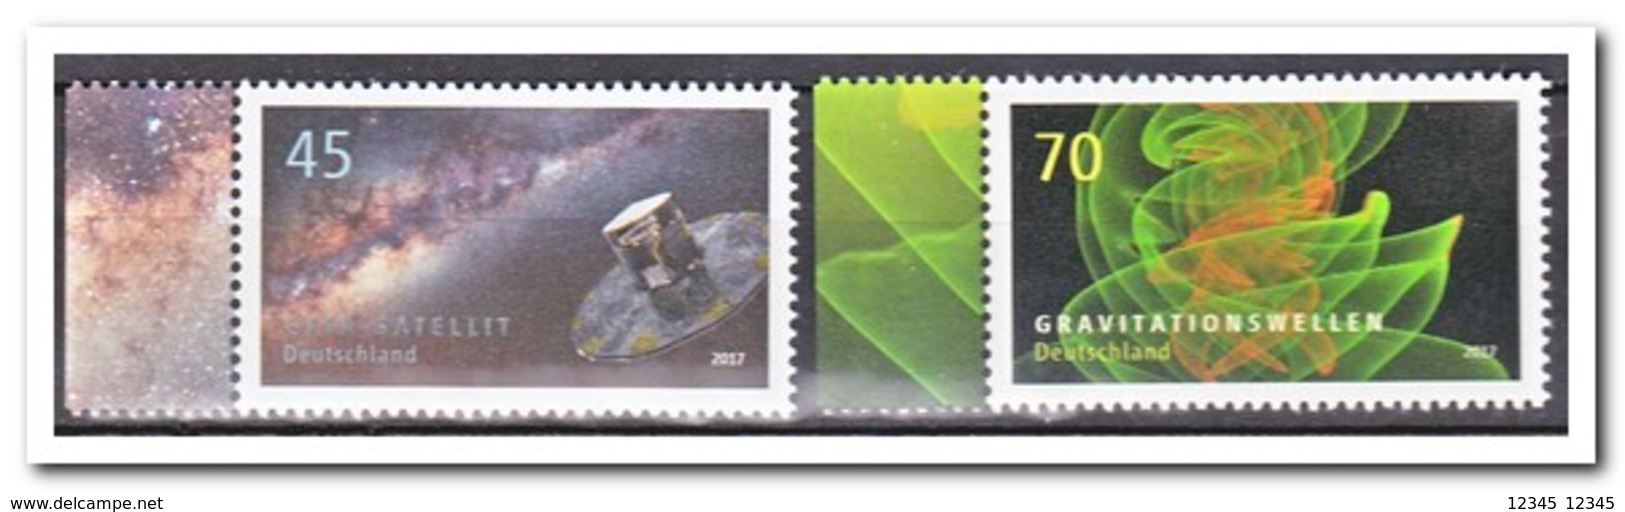 Duitsland 2017, Postfris MNH, MI 3347-48, Astrophysics - Nuovi